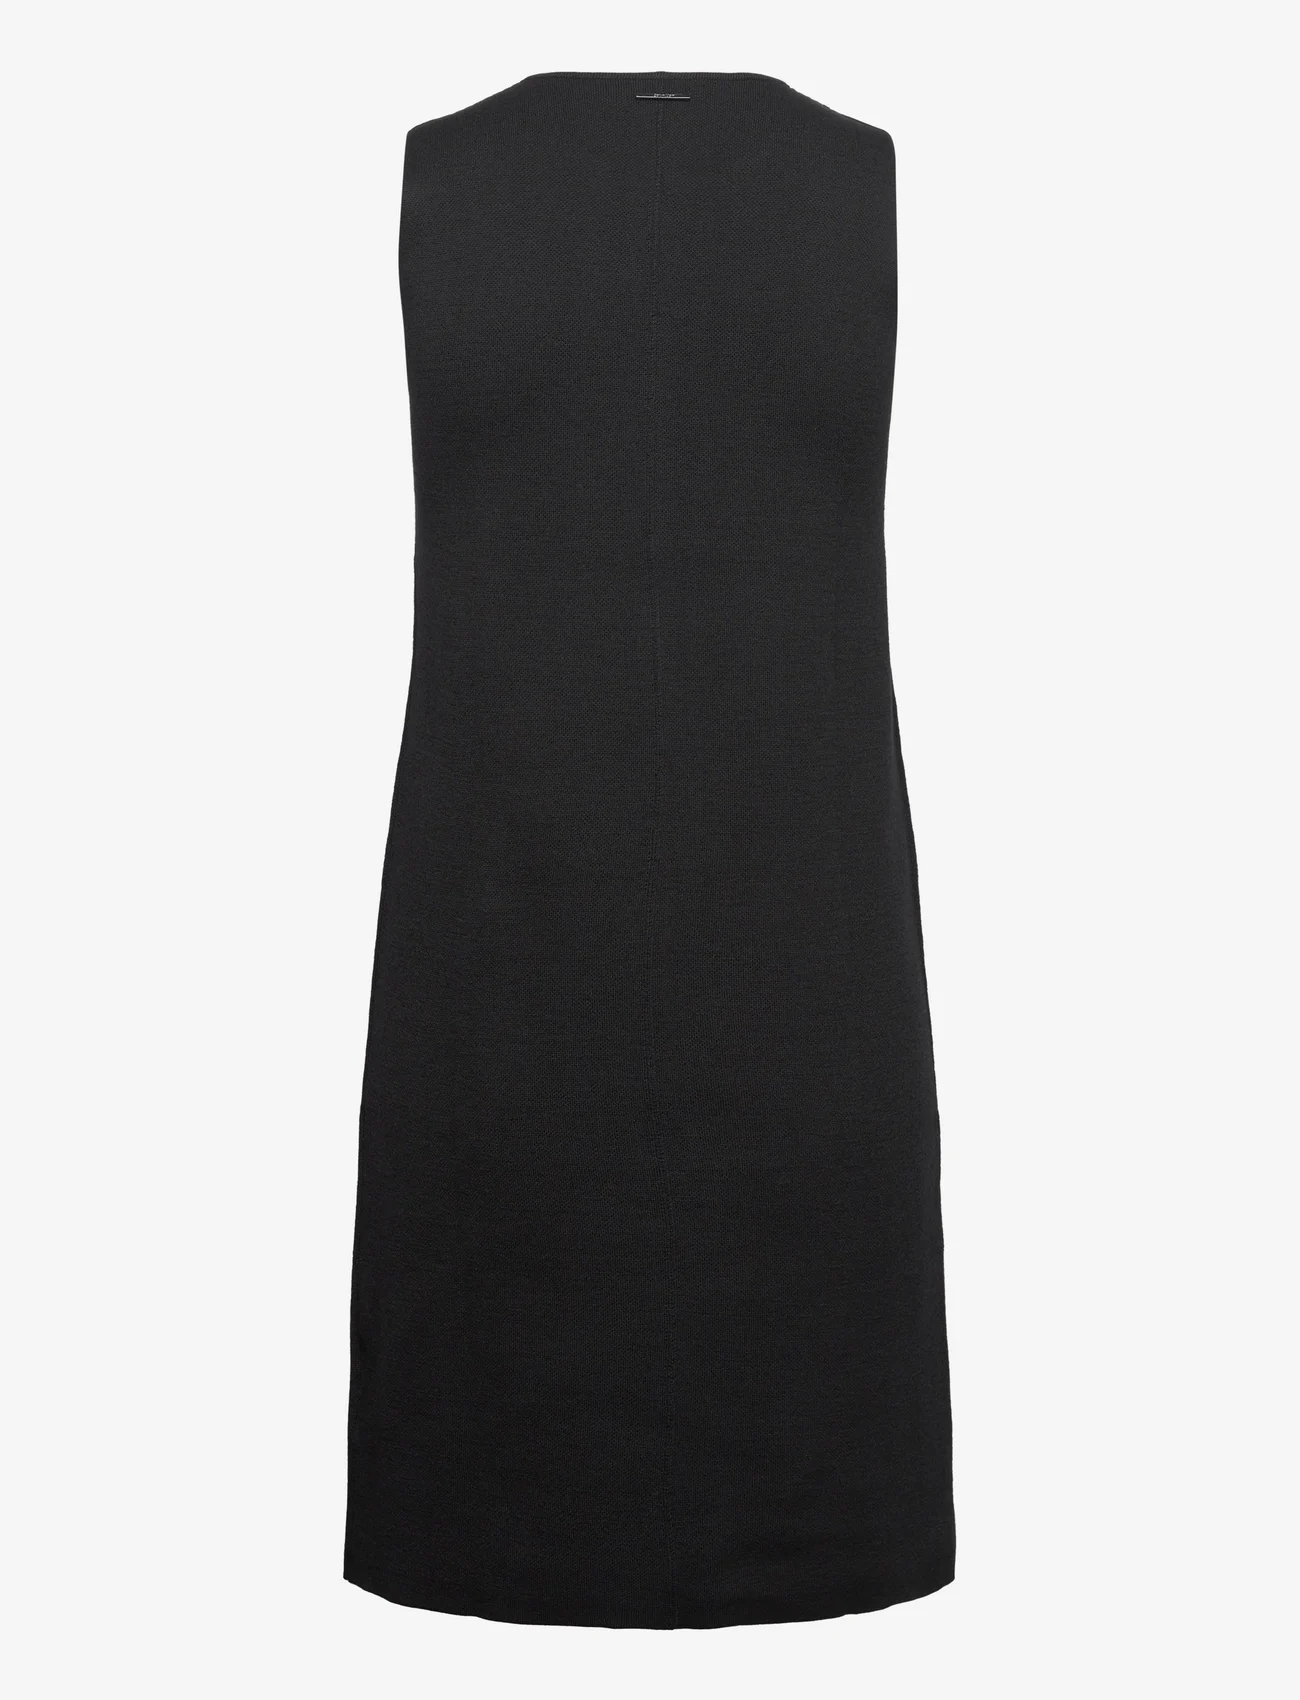 Calvin Klein - EXTRA FINE WOOL SHIFT DRESS - kootud kleidid - ck black - 1